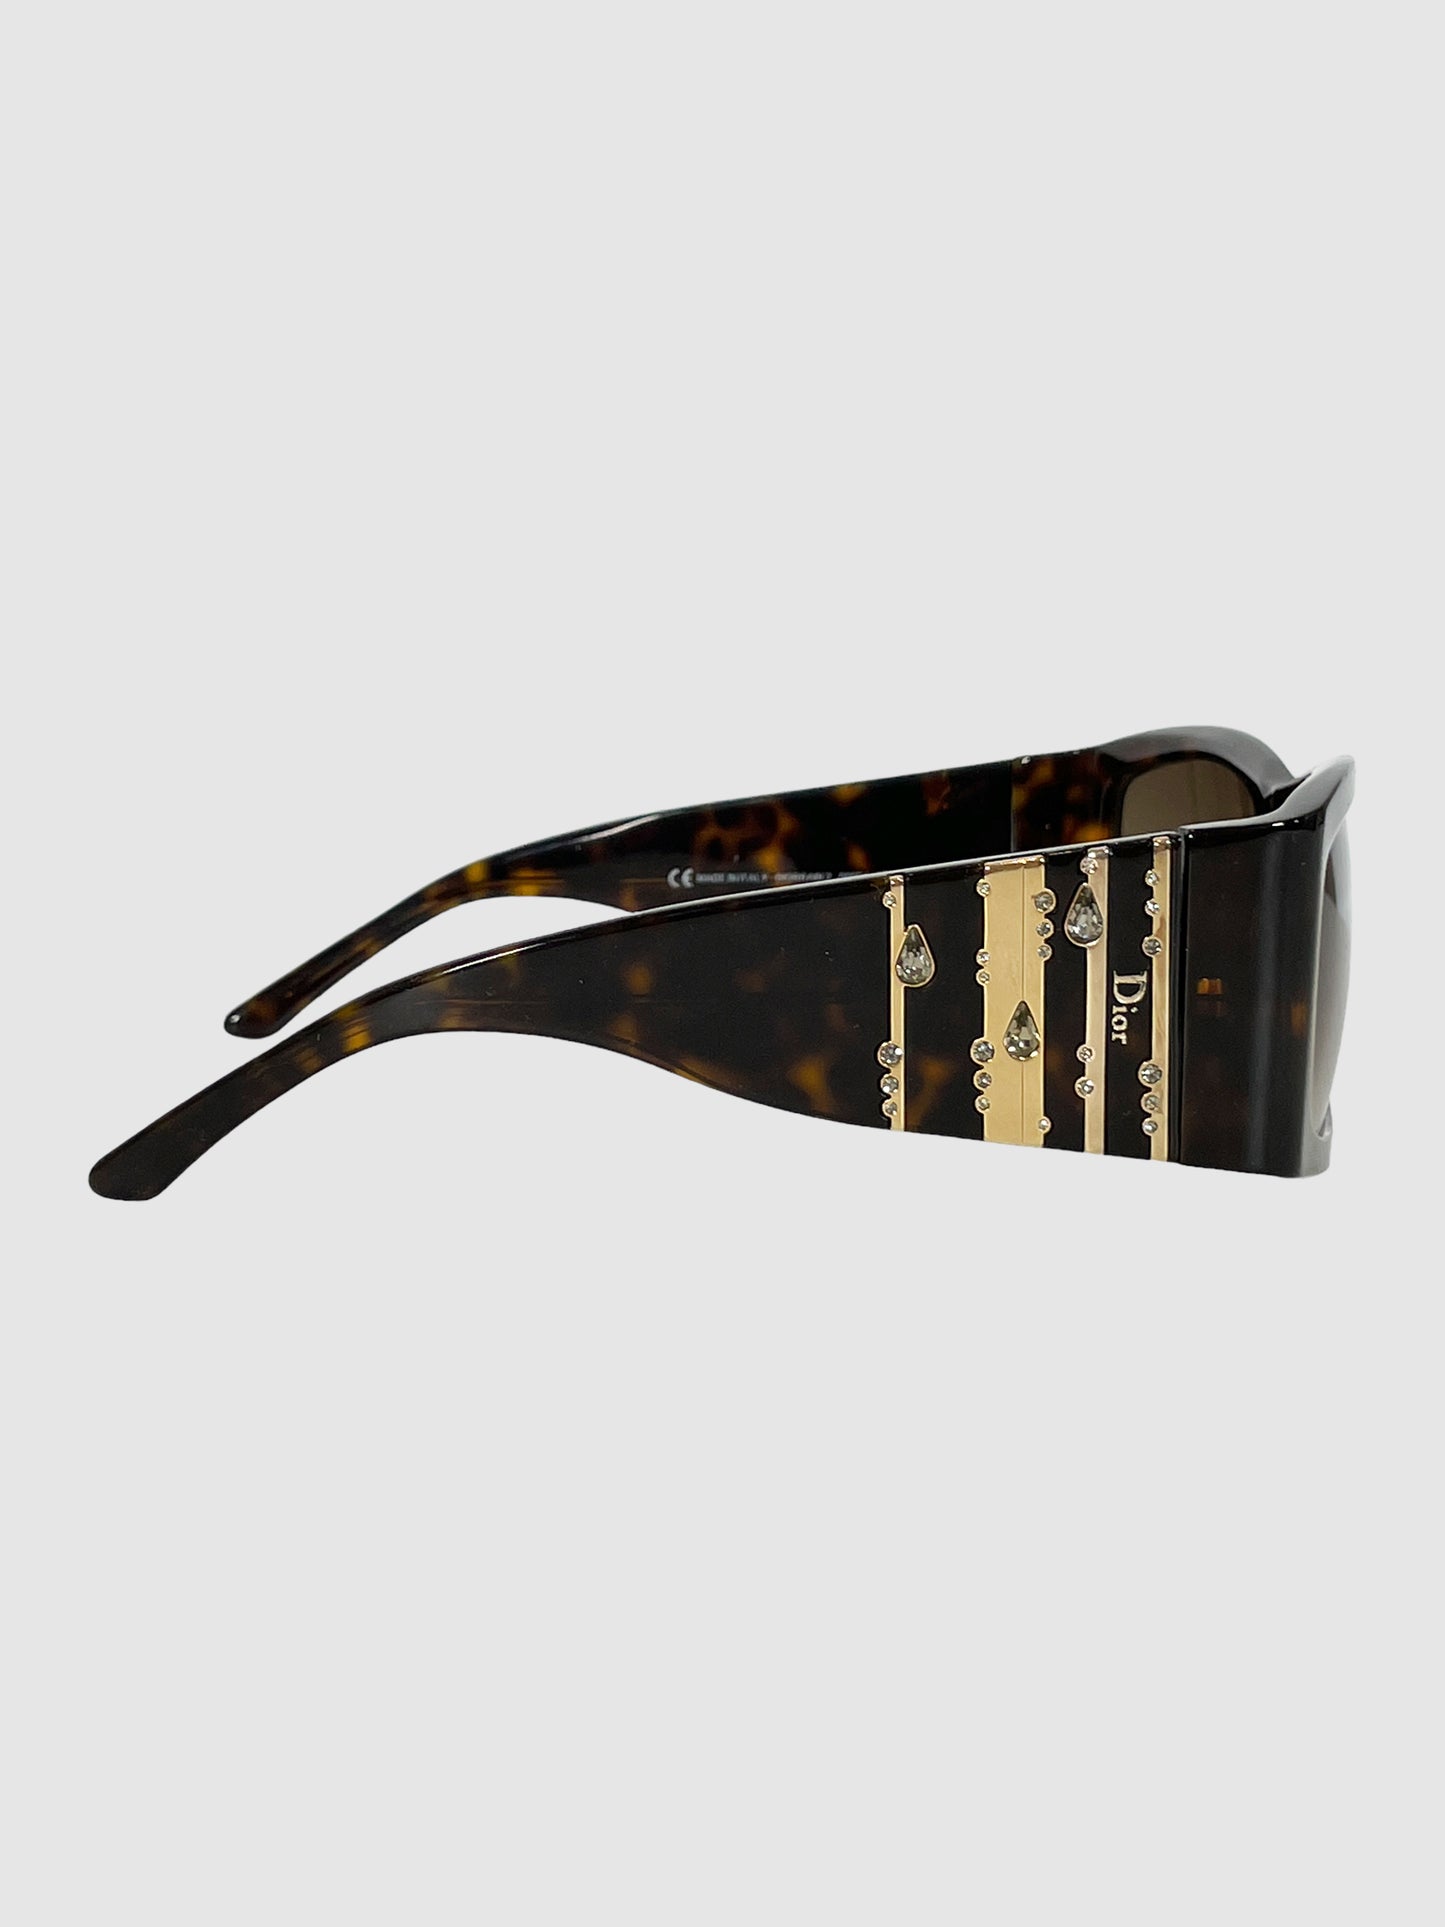 Christian Dior "Rain 2" Rectangular Swarovski Teardrop Sunglasses in Brown